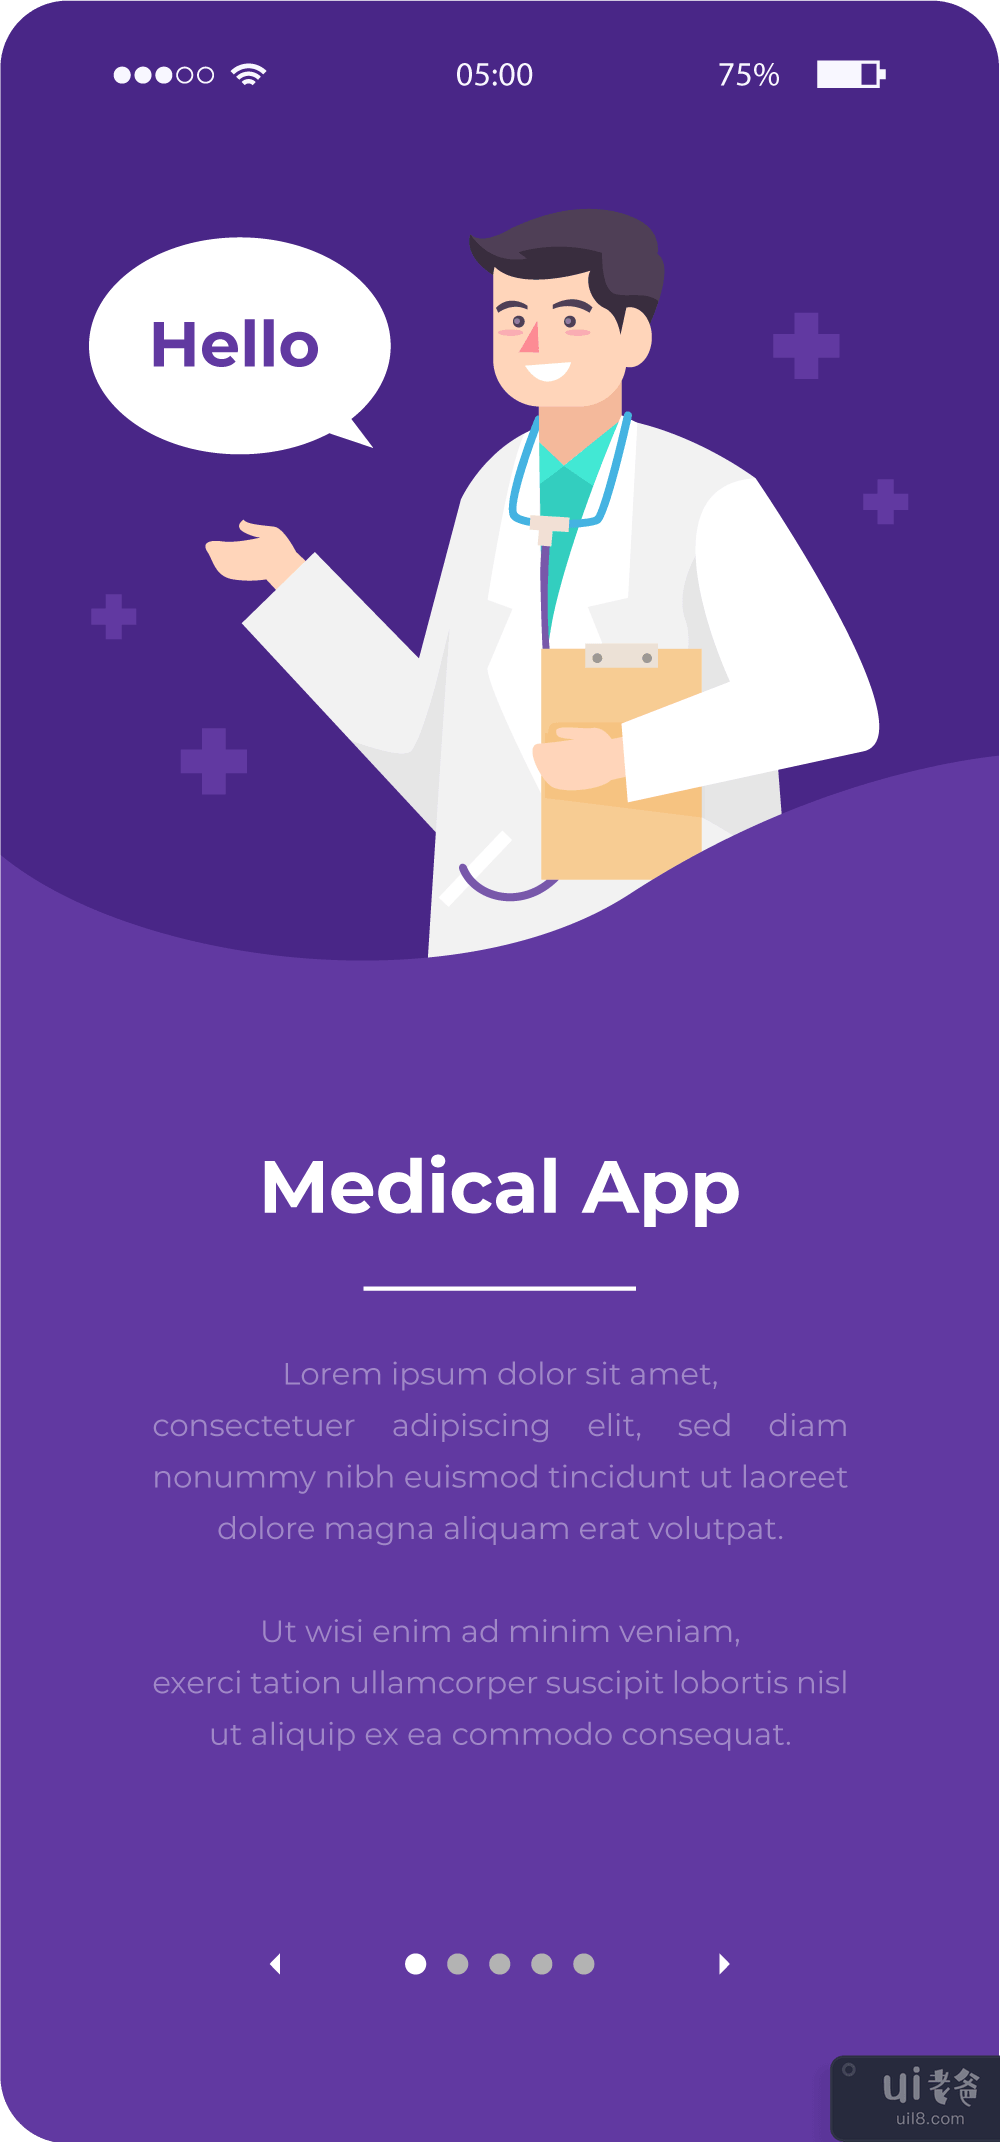 医疗应用(Medical App)插图1